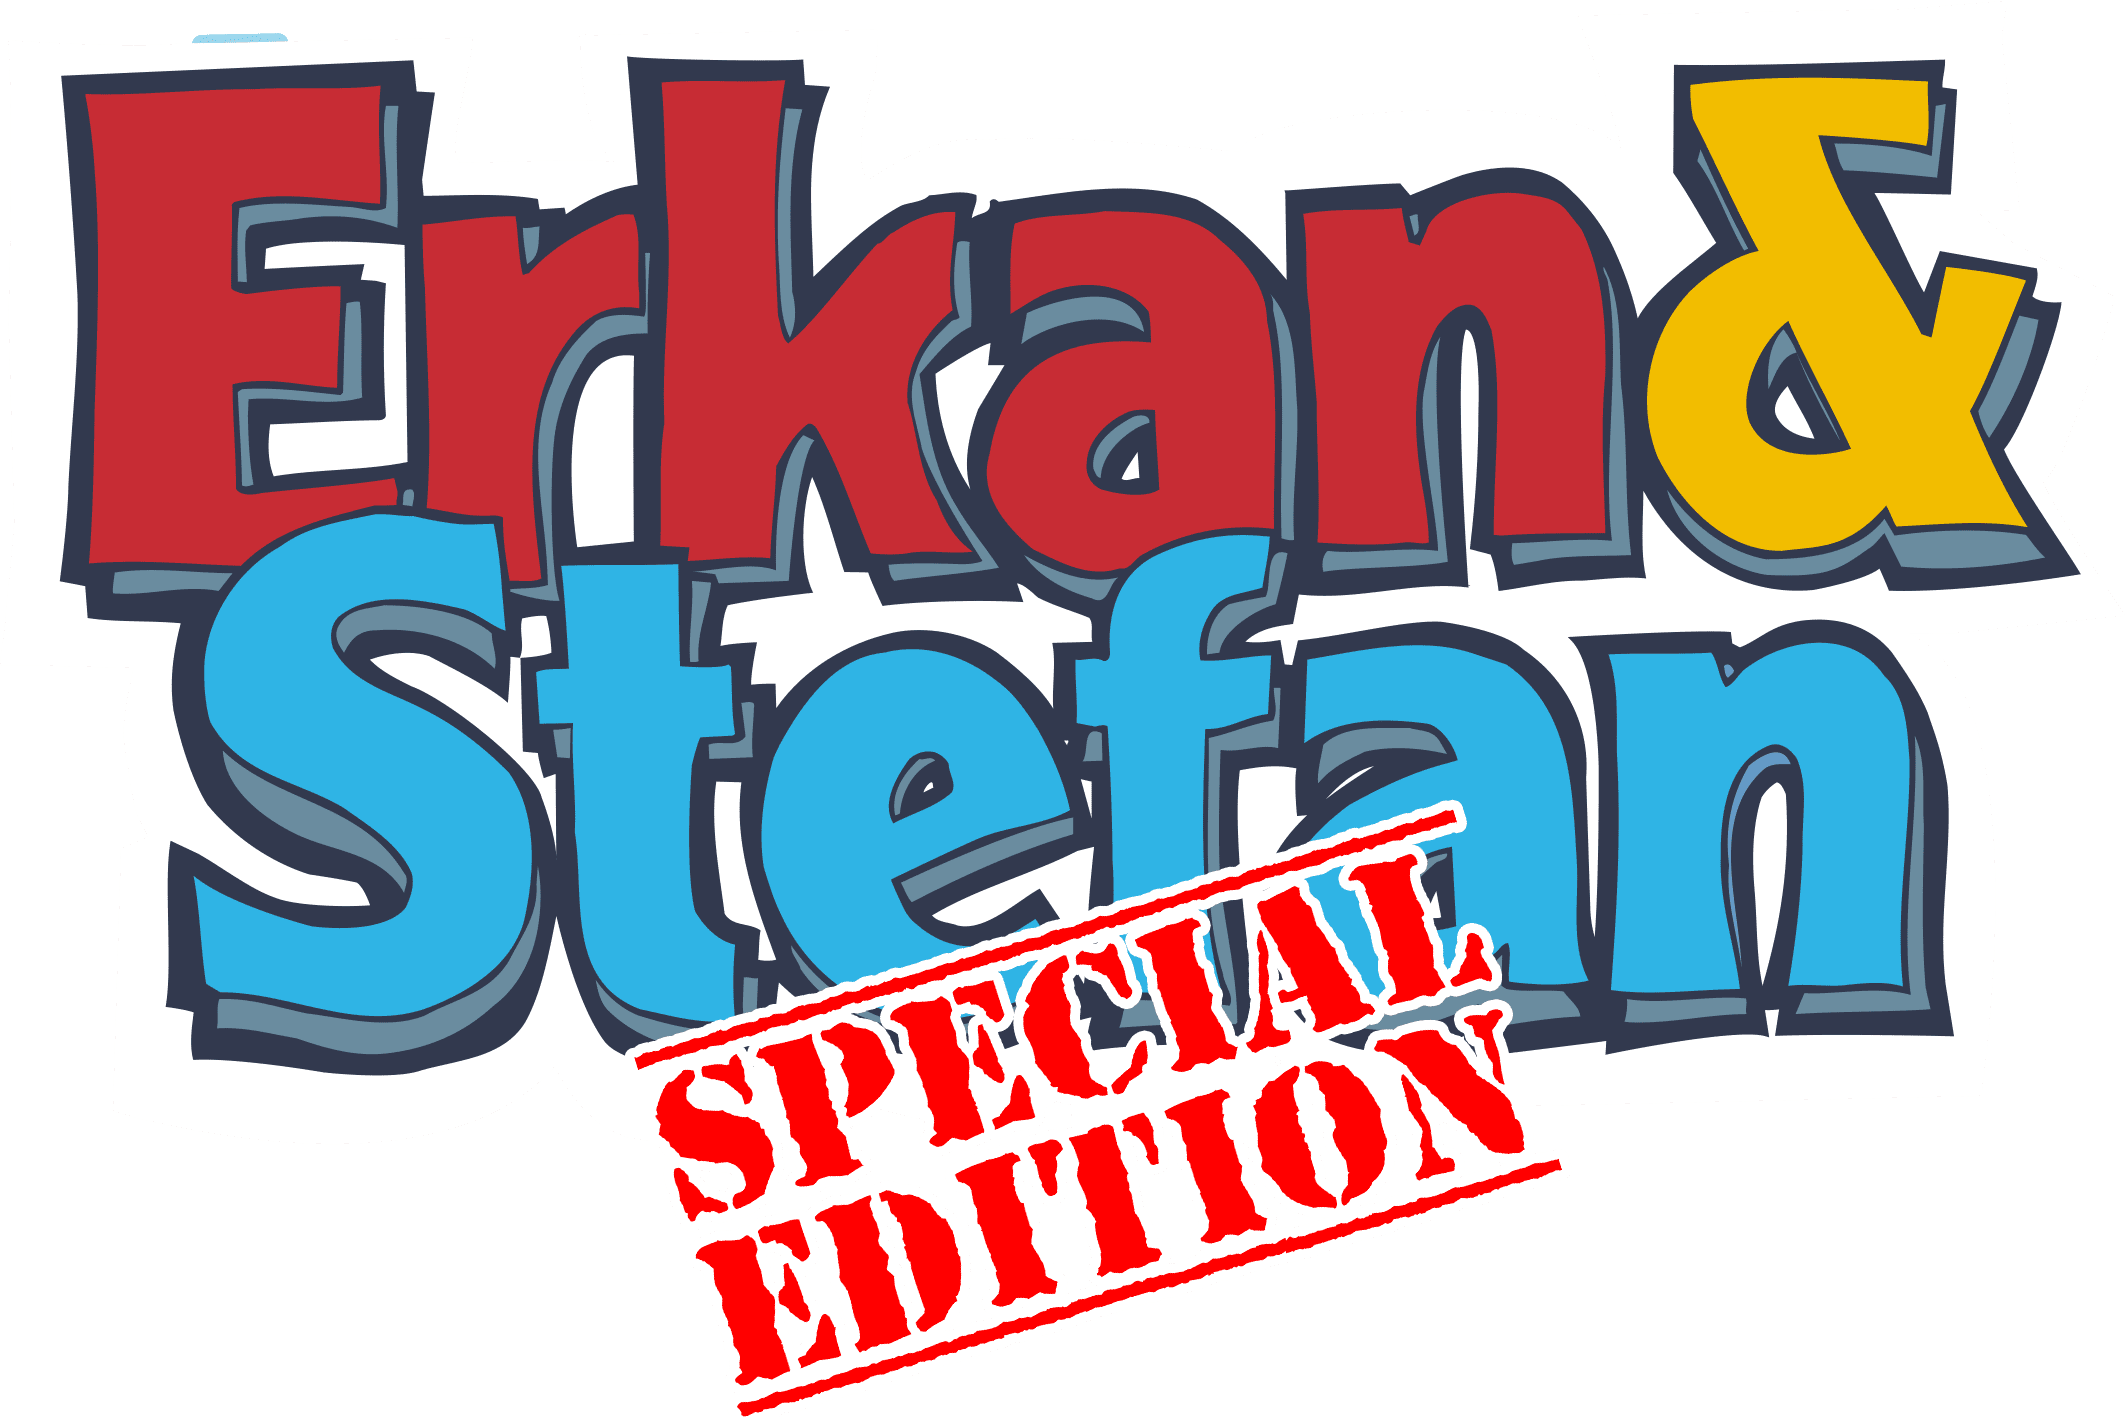 Logo: Erkan & Stefan in rot, gelber und blauer Farbe mit knallroter Special Edition in Stempeloptik